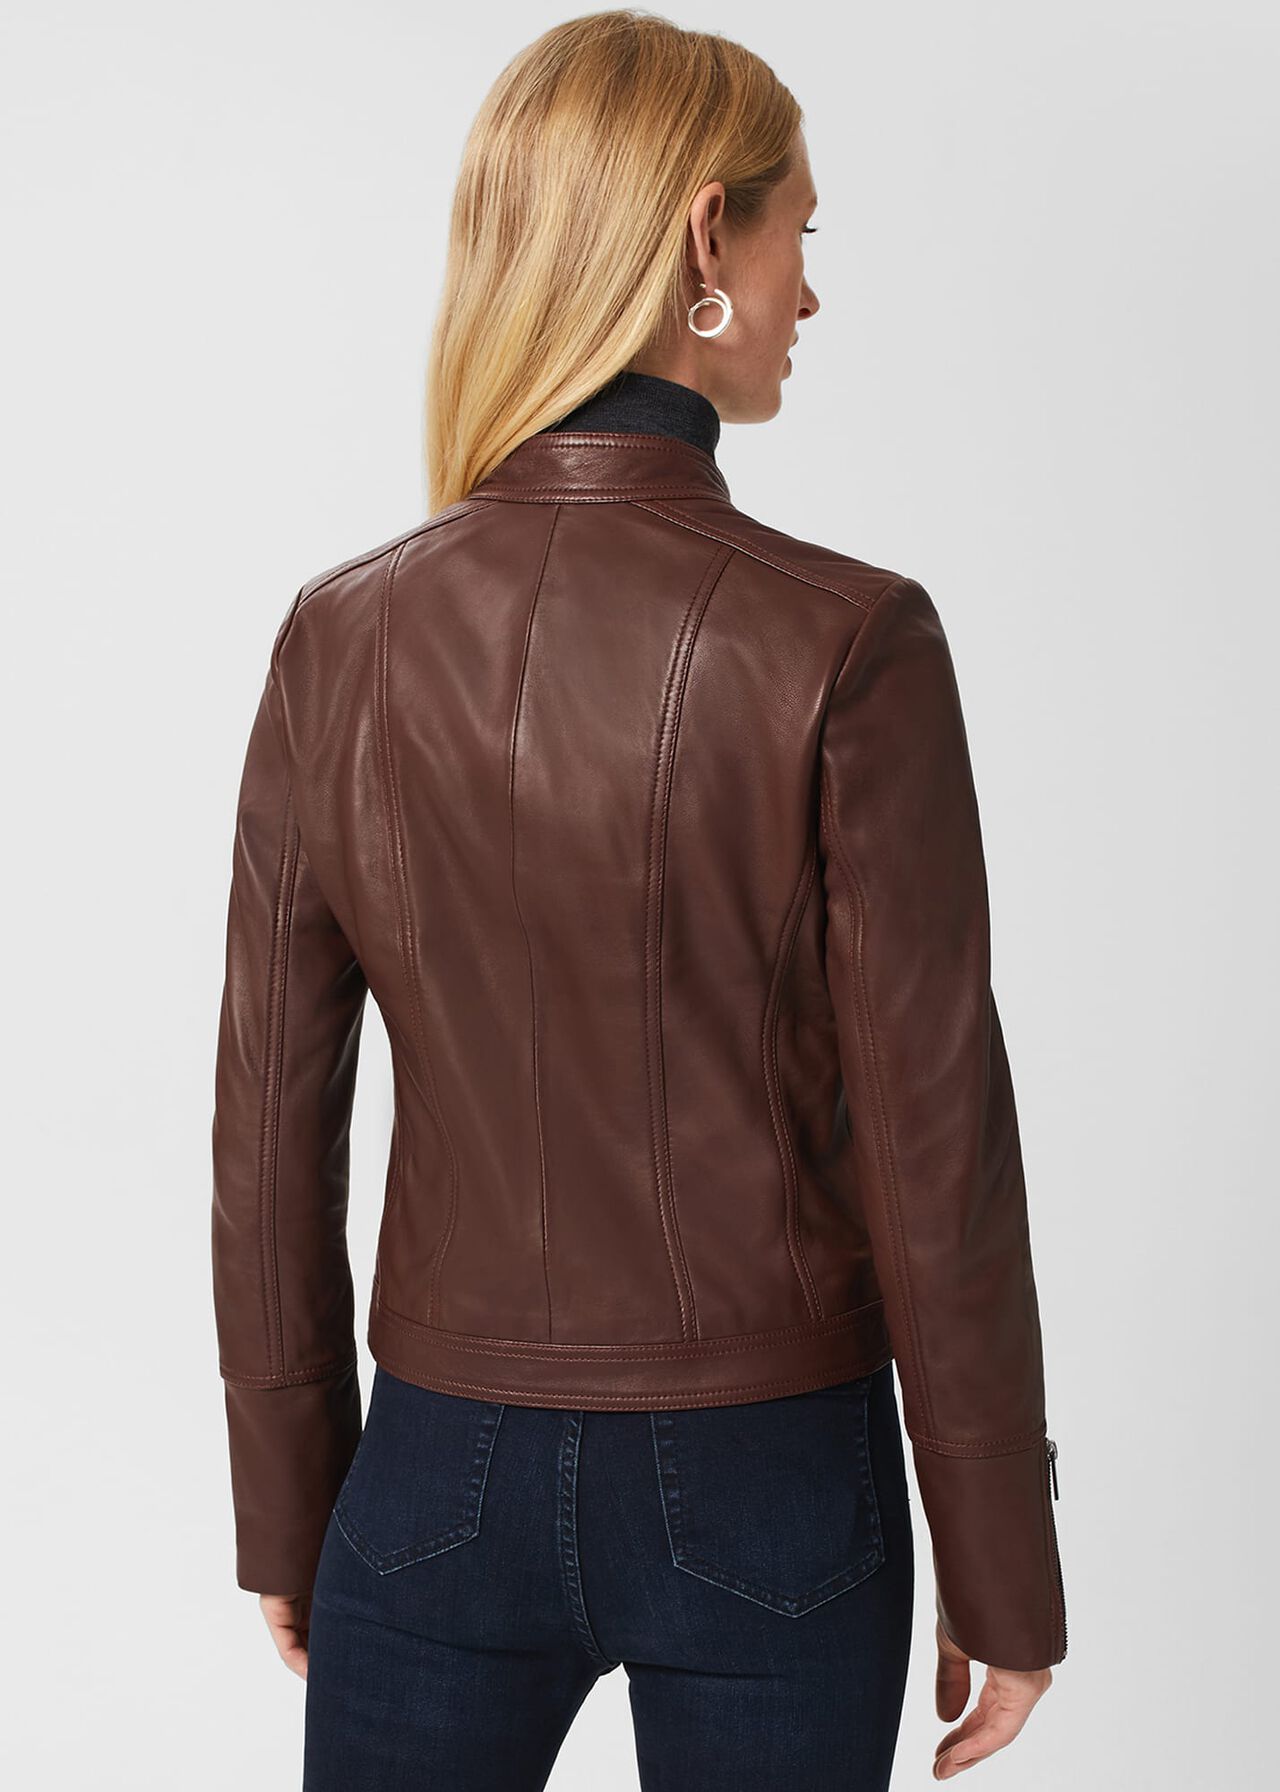 Fran Leather Jacket, Dark Plum, hi-res